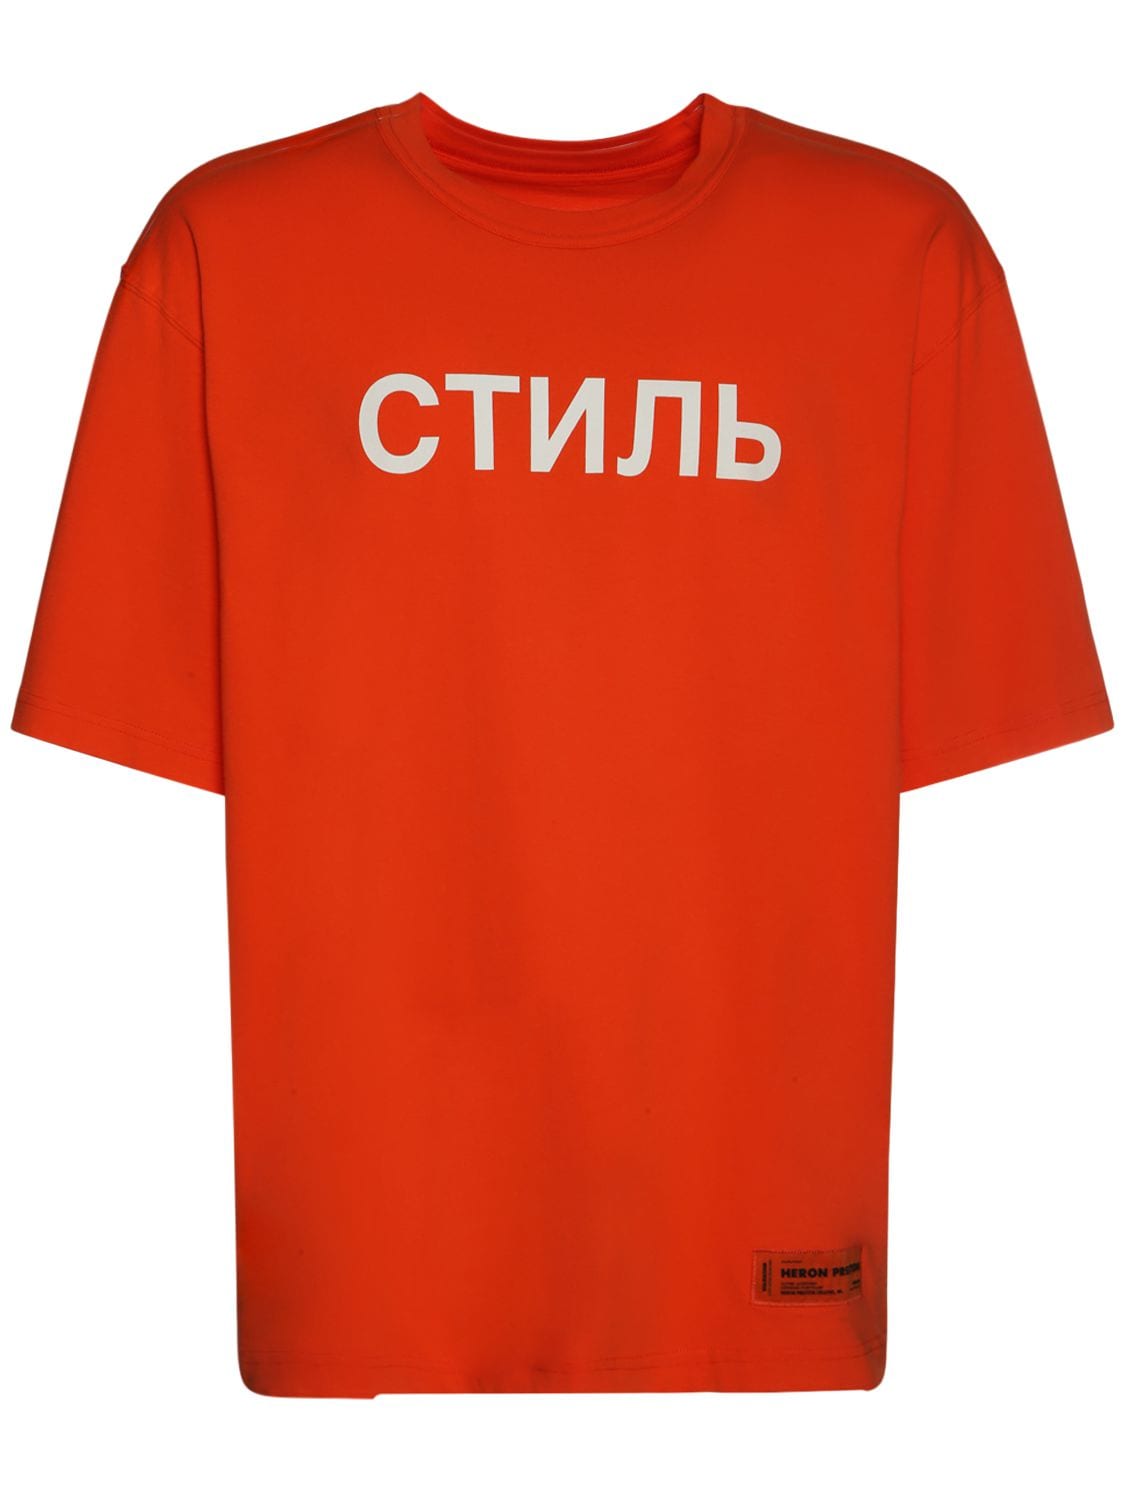 Heron Preston Ctnmb Print Cotton Jersey T-shirt In Orange,white